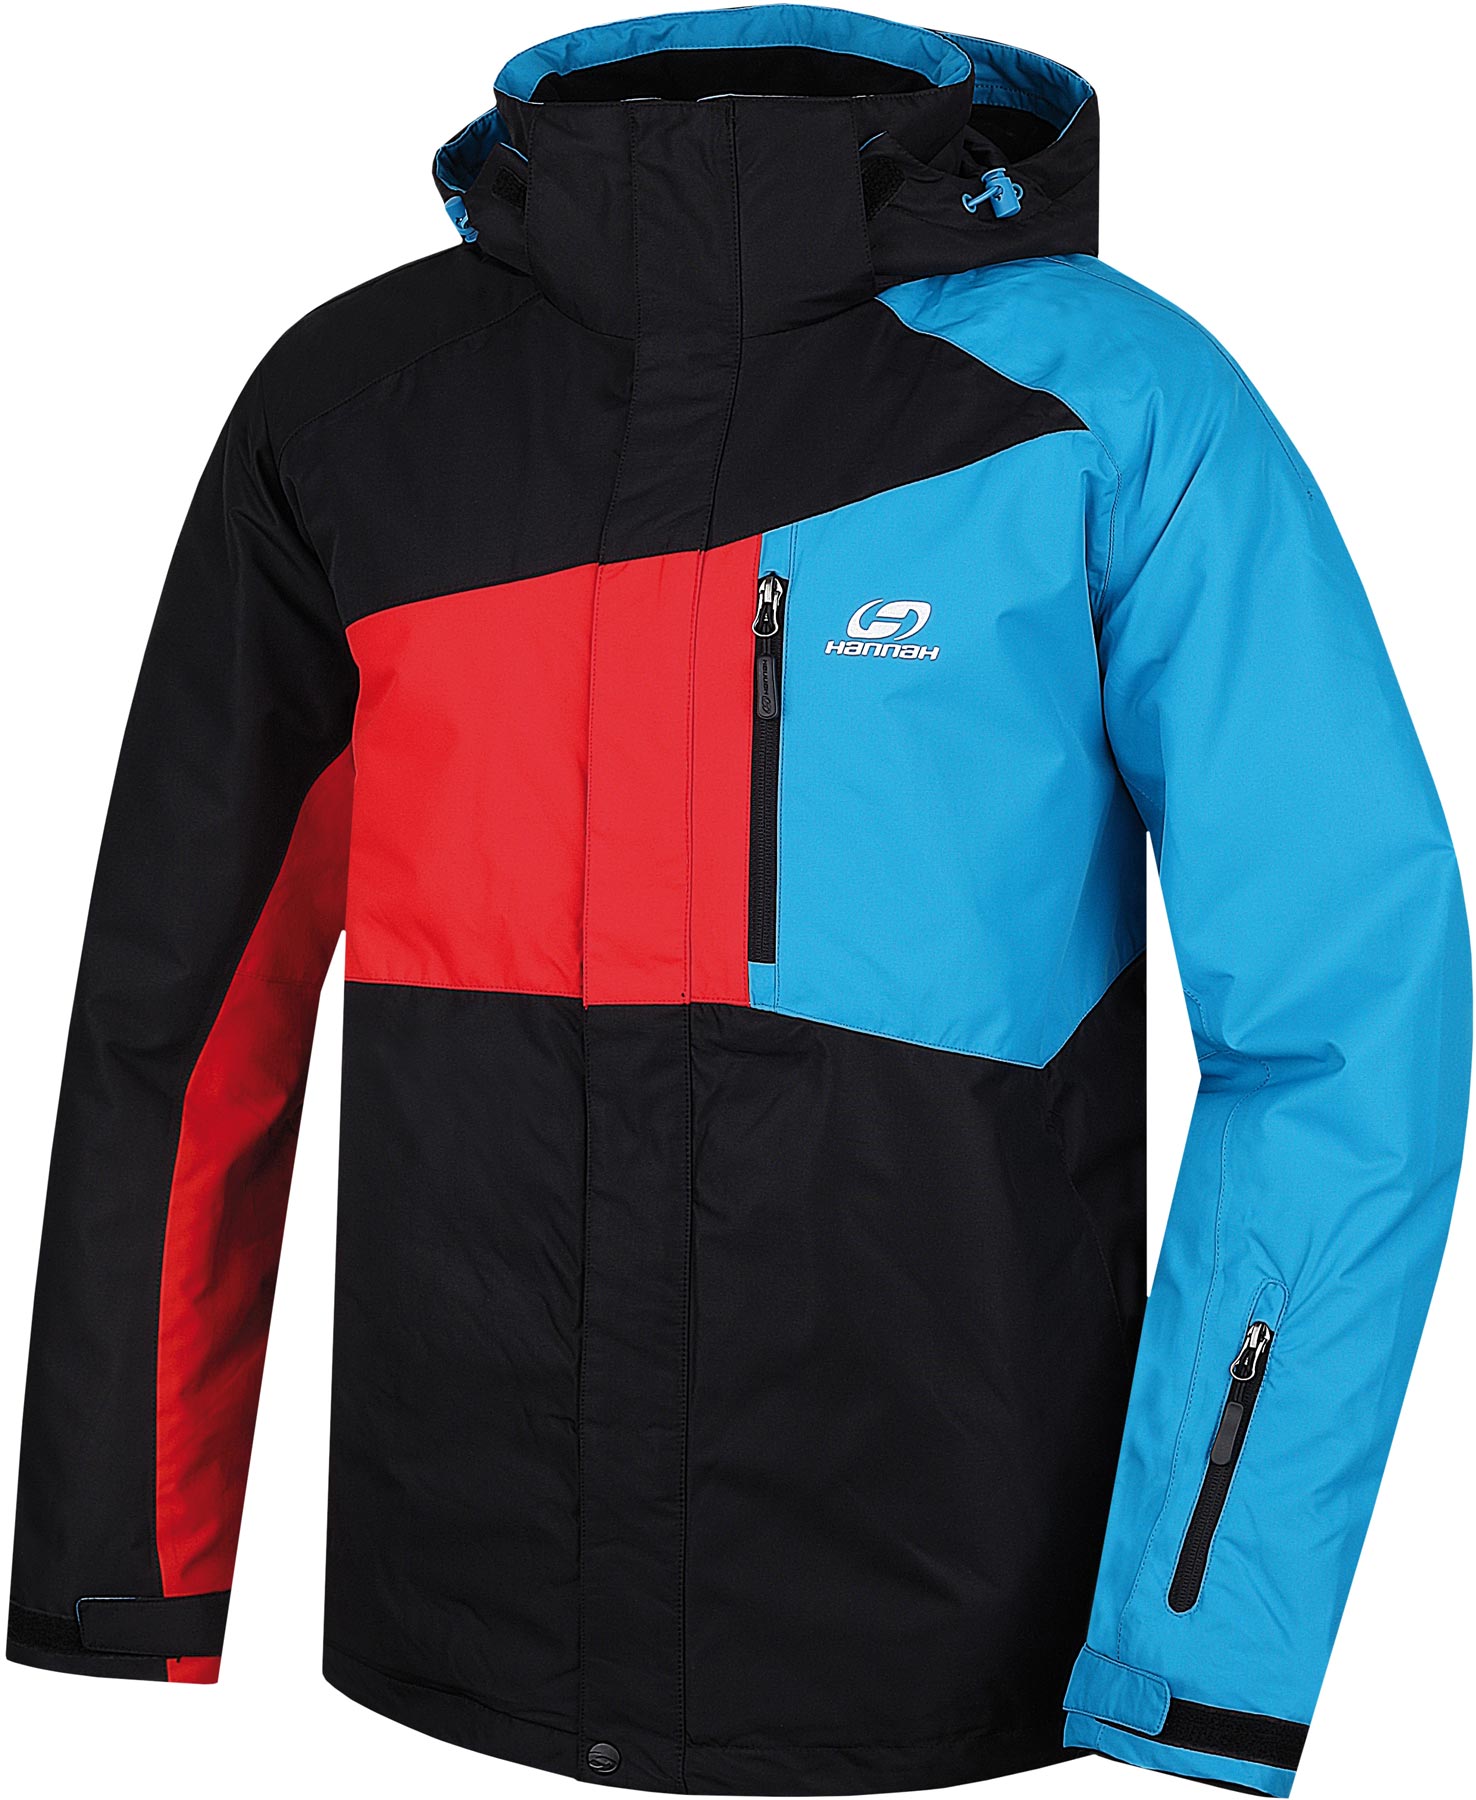 PENDER - Men's Ski Jacket